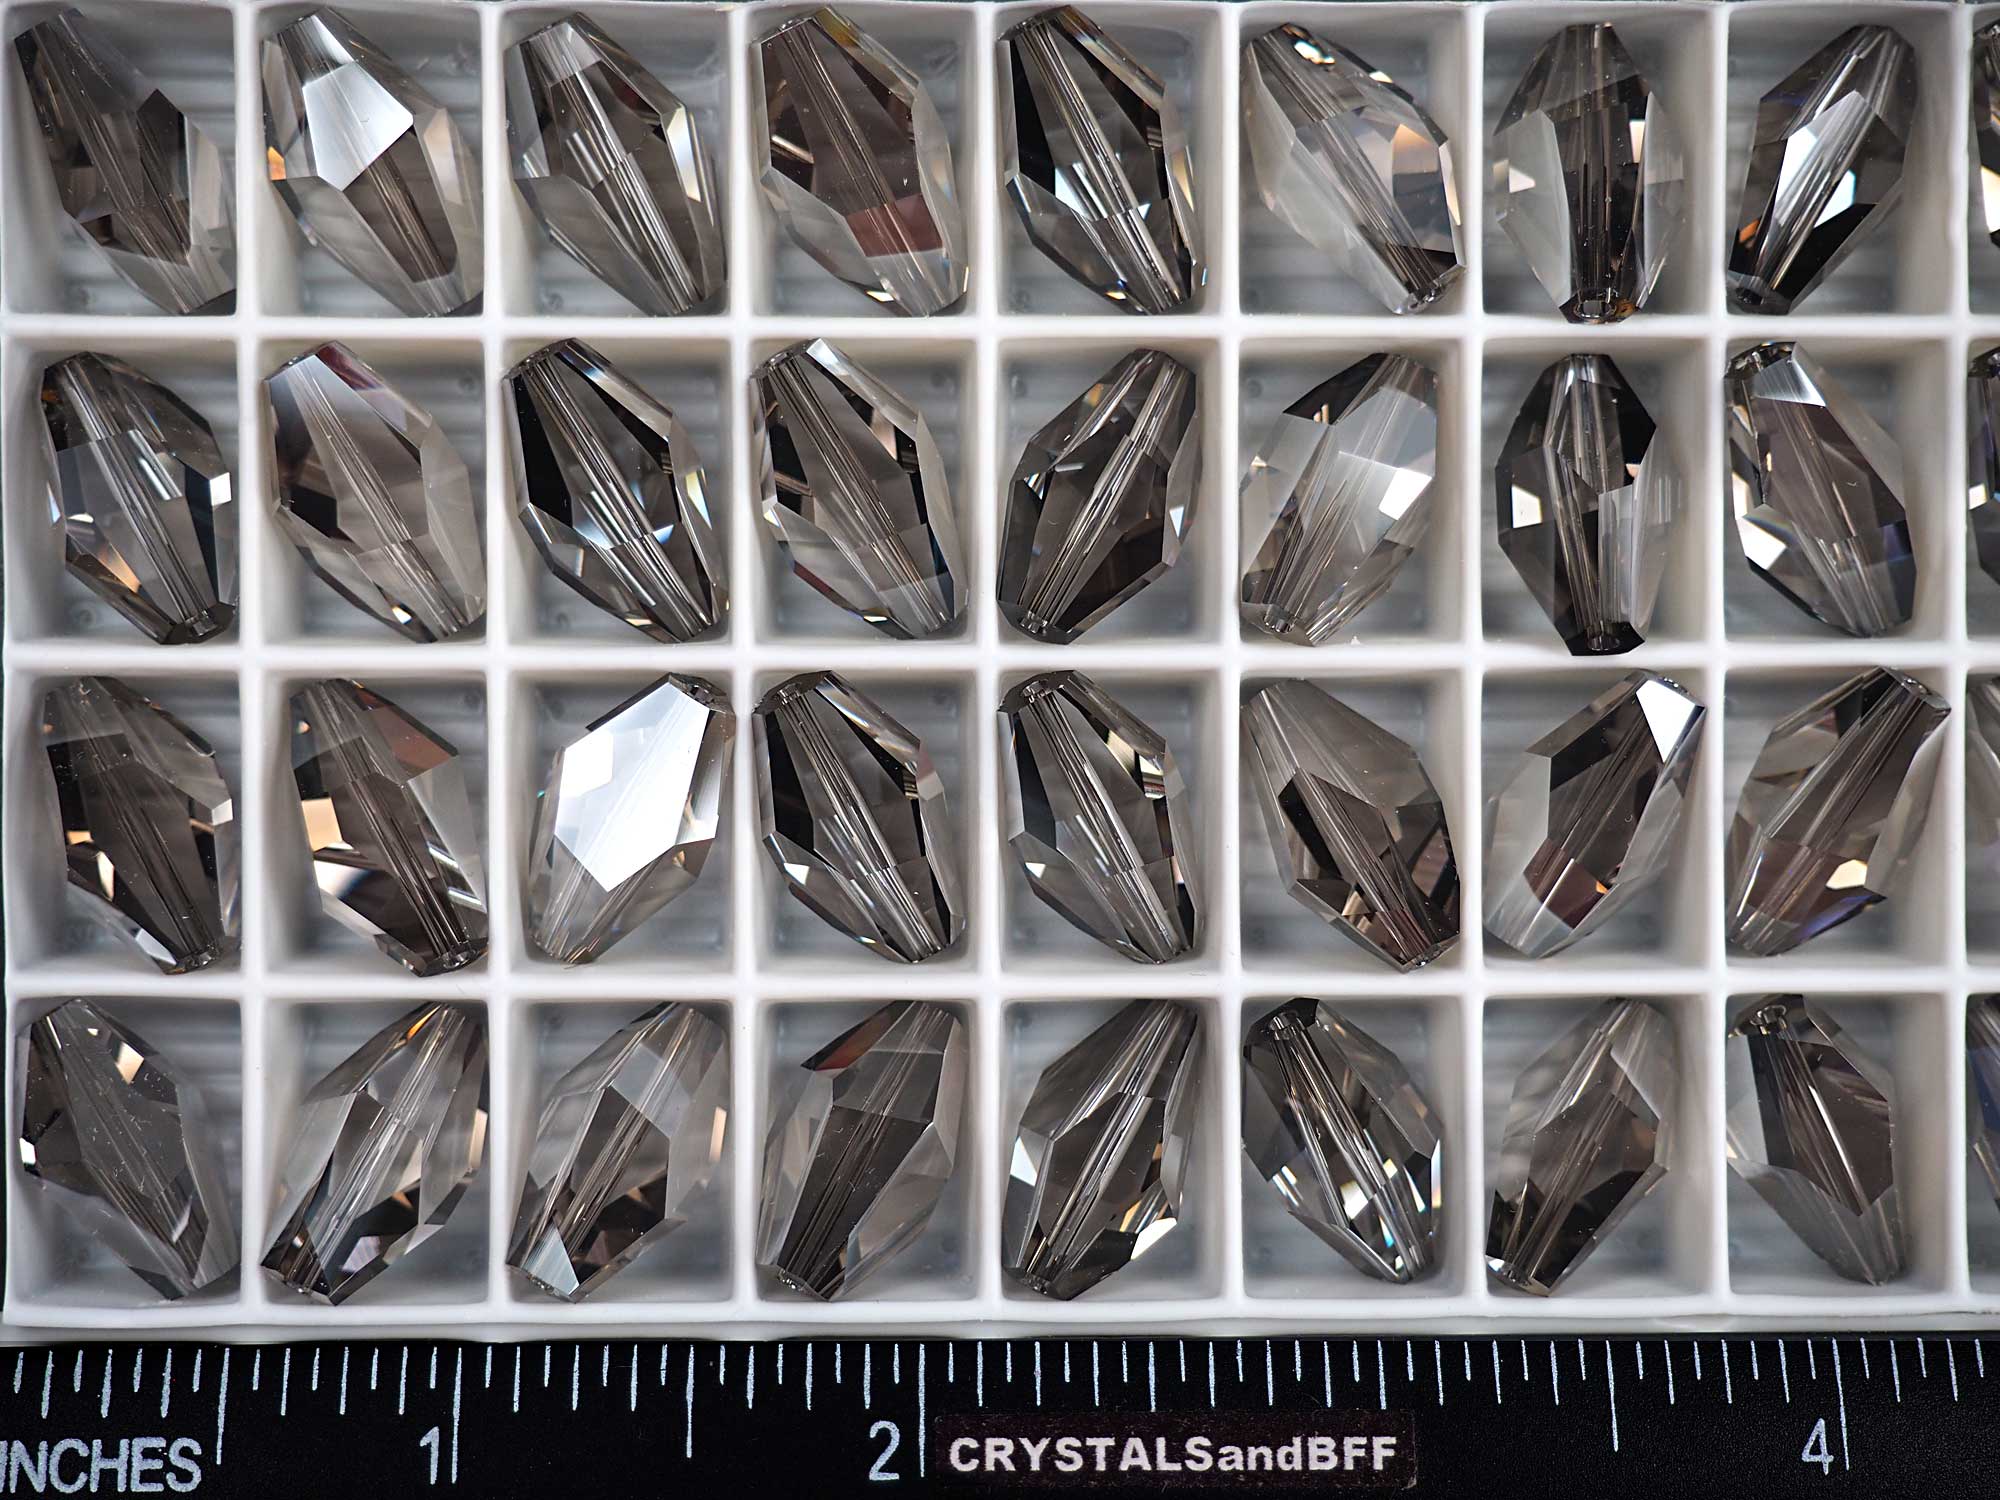 Swarovski Art.# 5203 - 18x12mm Crystal Satin Coated, Genuine Swarovski Faceted Polygon Beads, 4 pieces